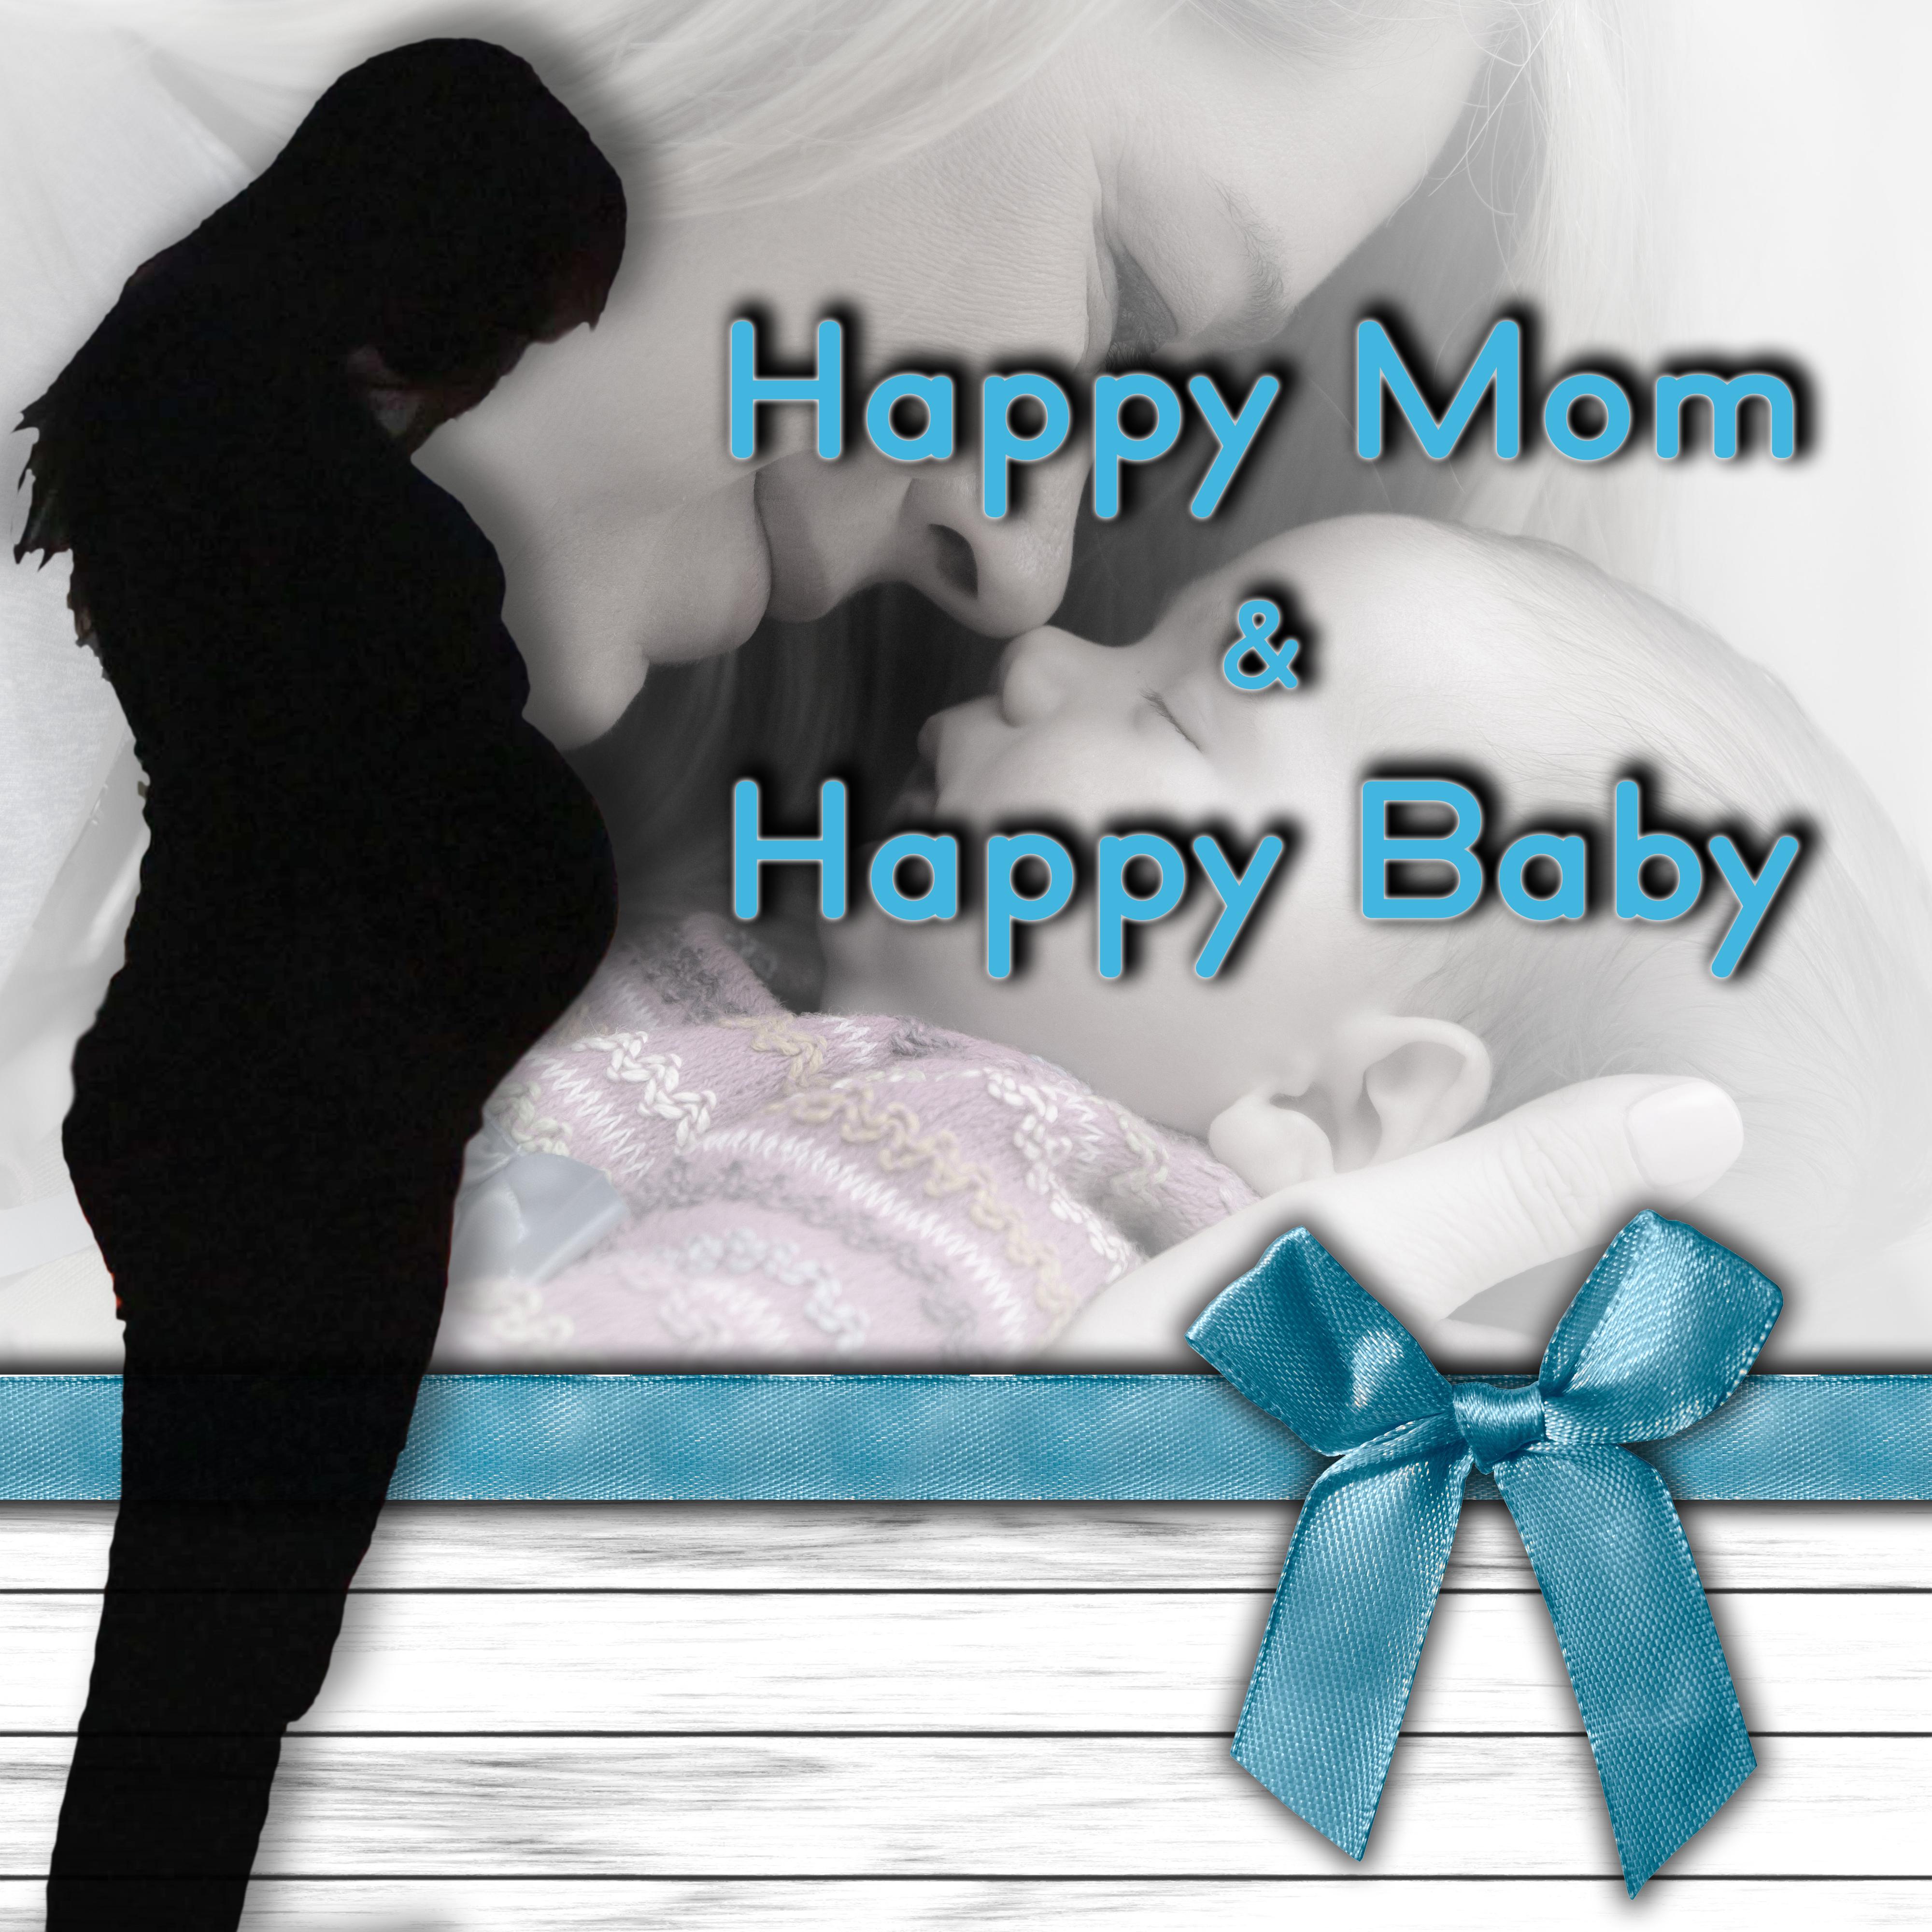 Happy Mom & Happy Baby